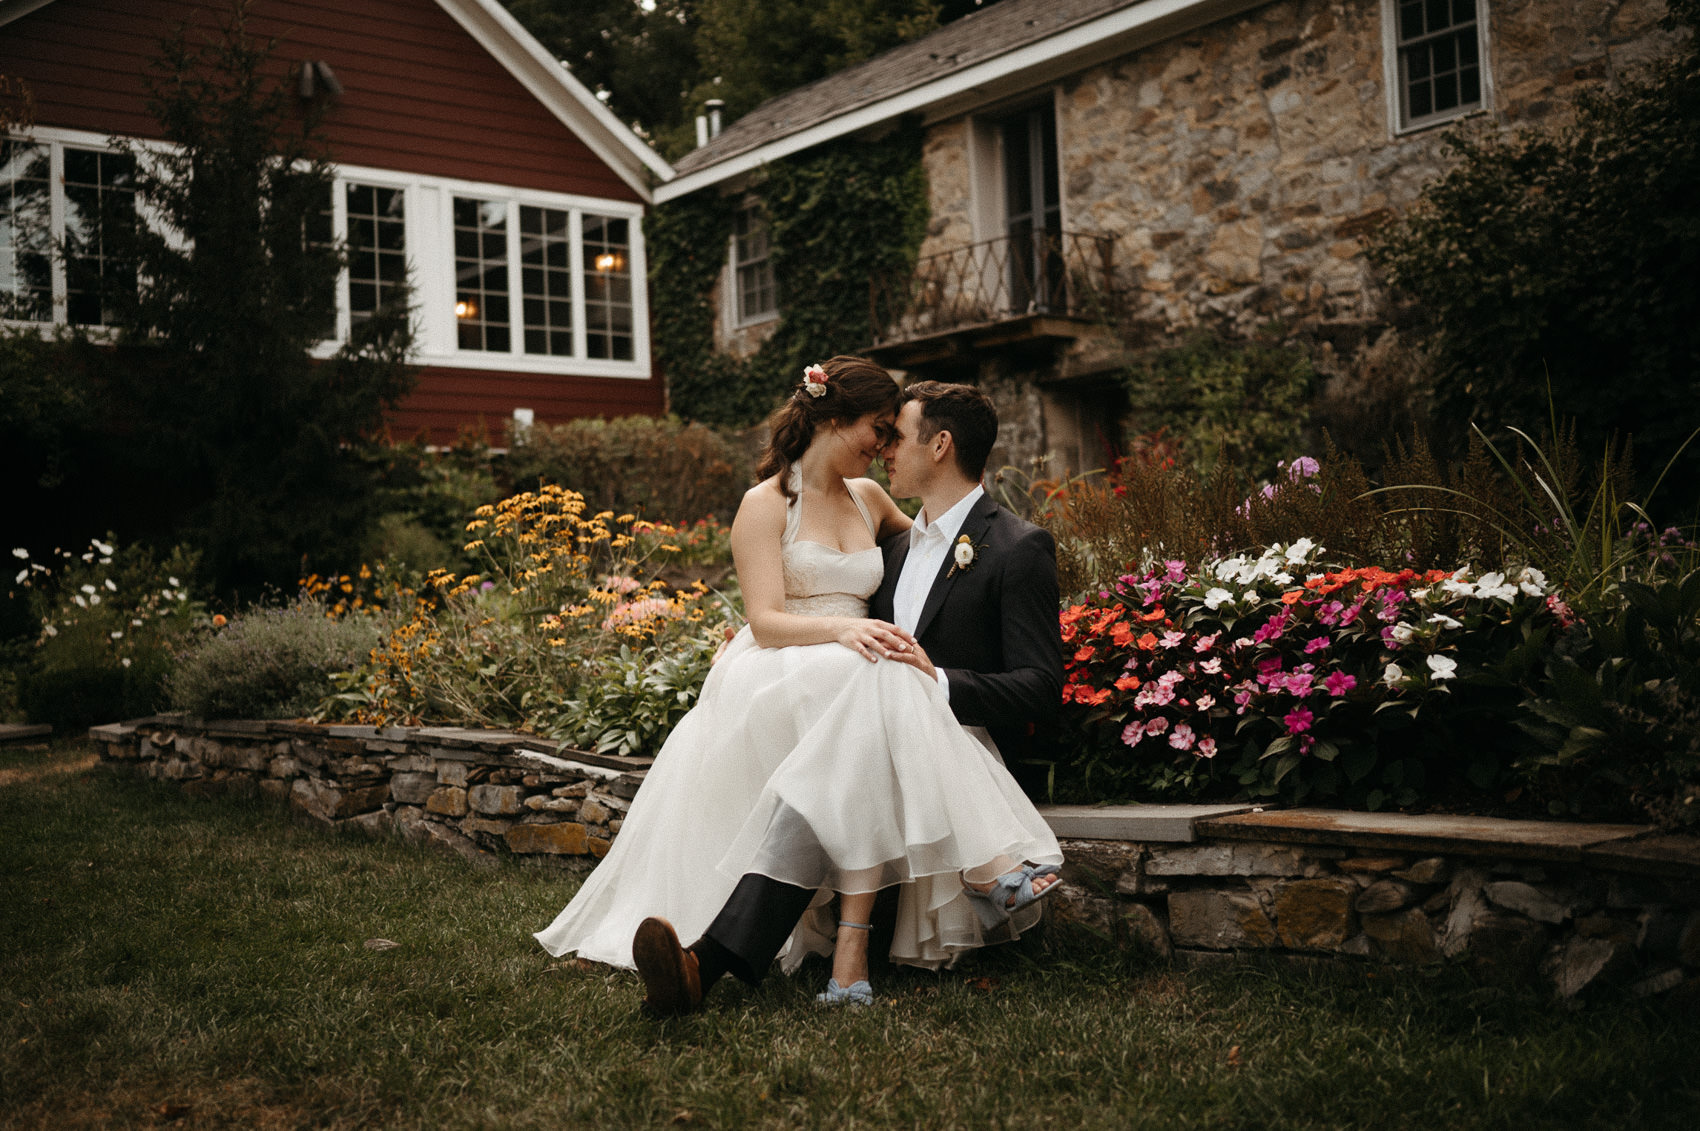 Georgia & Michael’s Crossed Keys Estate Wedding